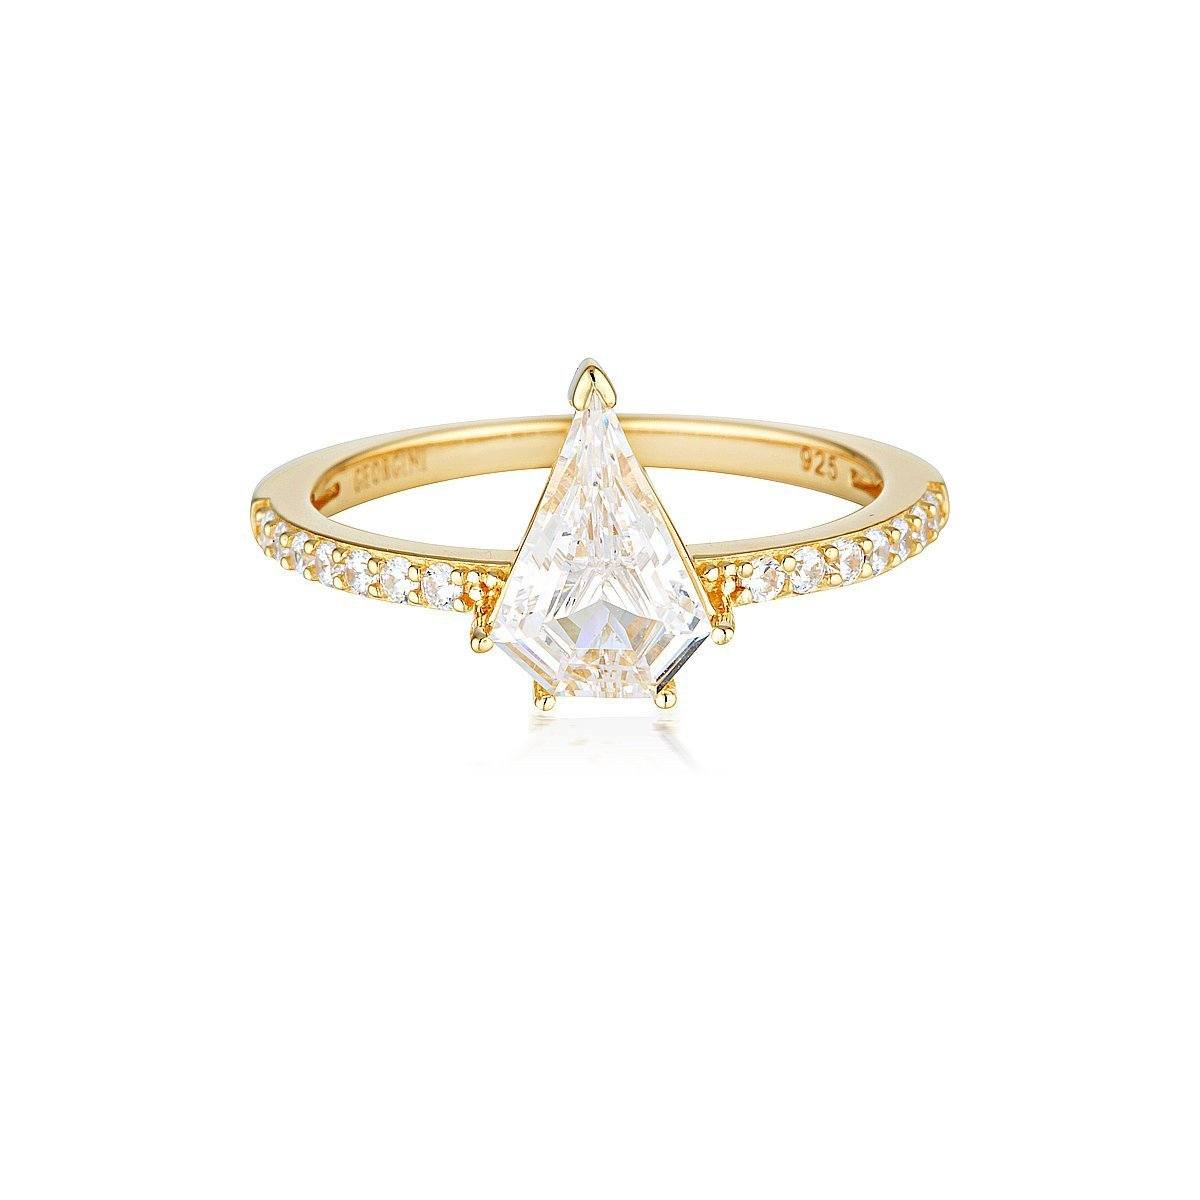 Georgini Rock Star Shield Gold Ring Bevilles Jewellers 